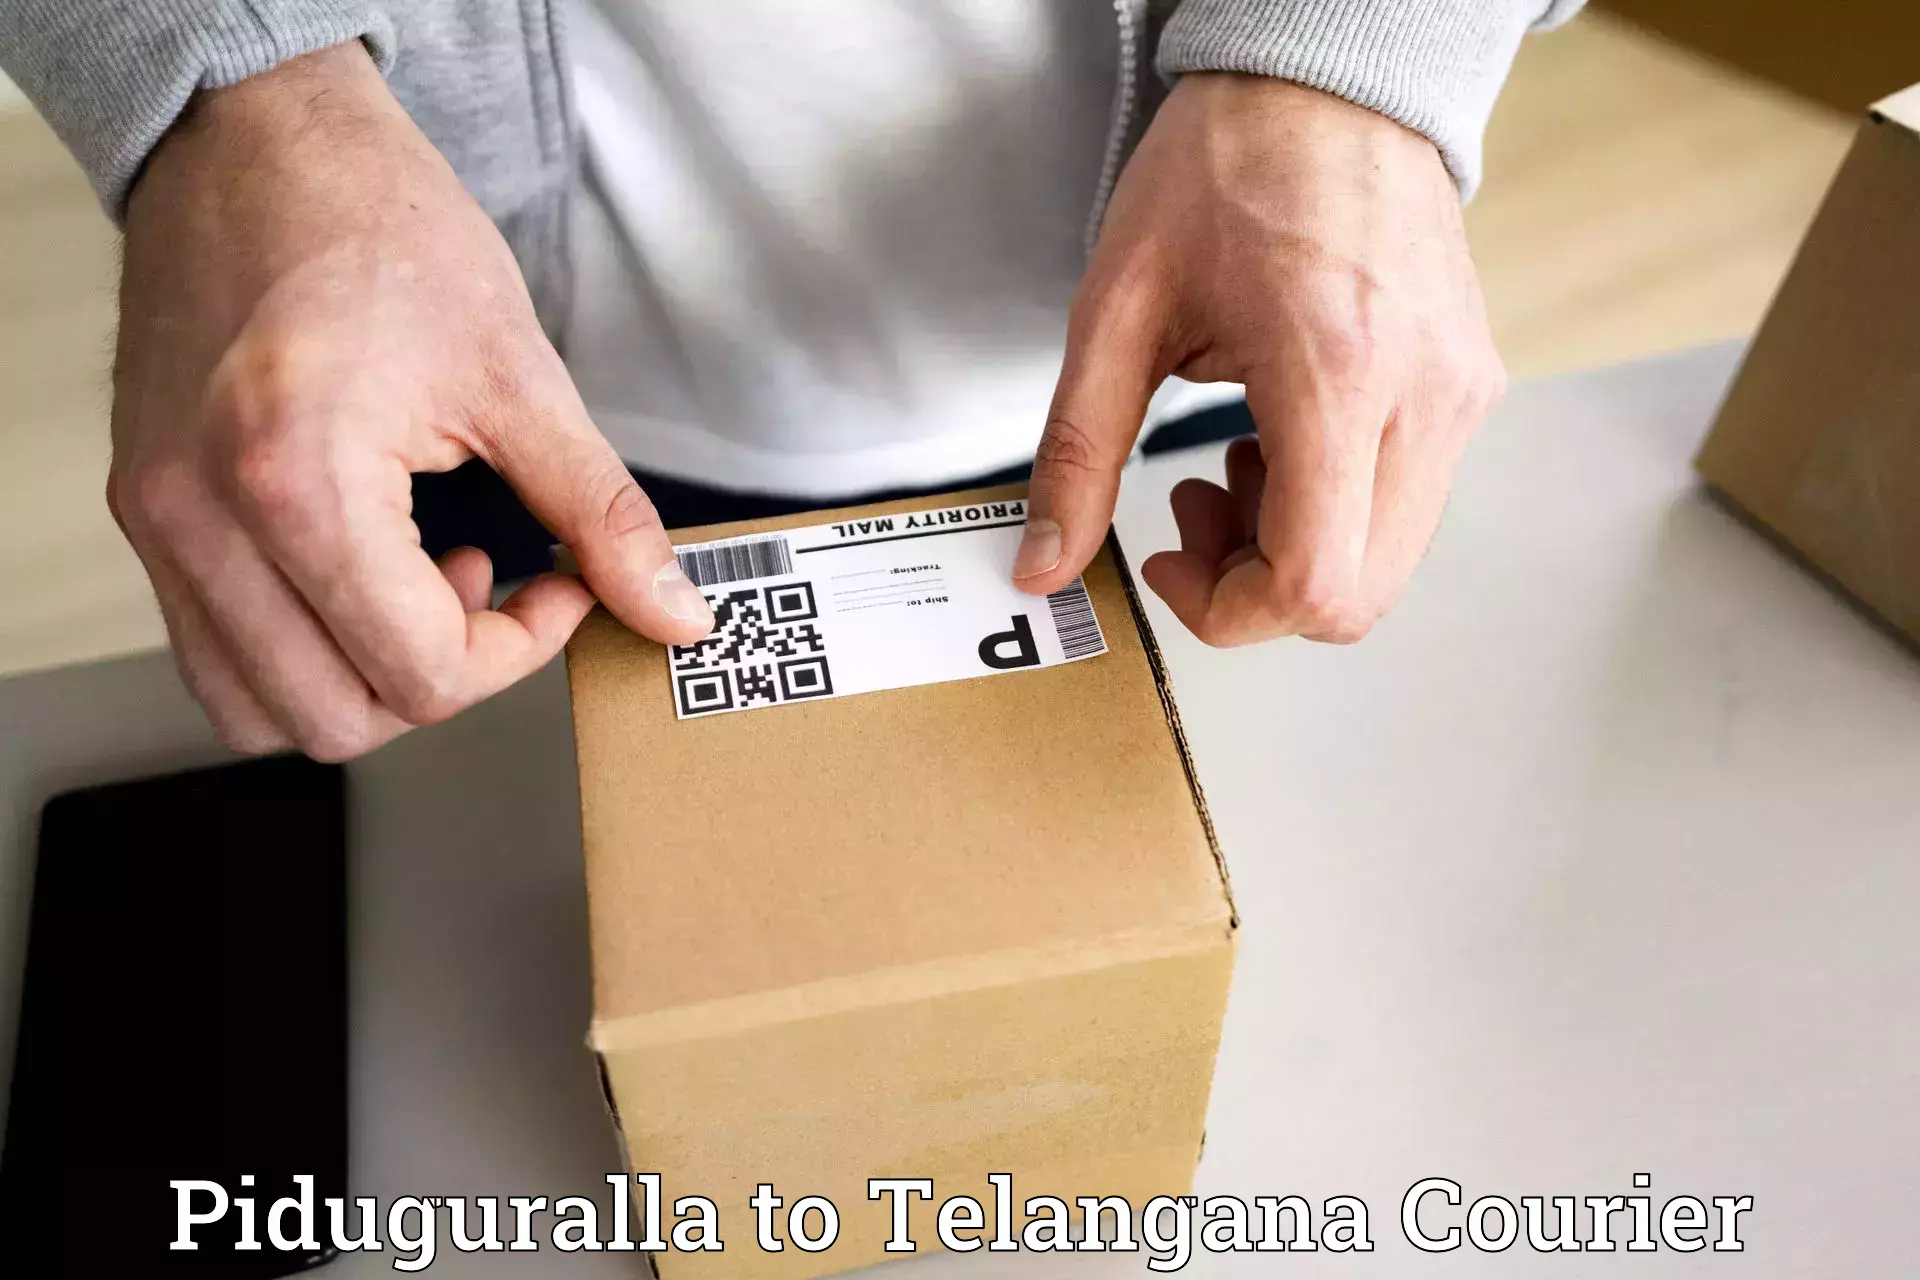 Professional courier handling Piduguralla to Eligedu